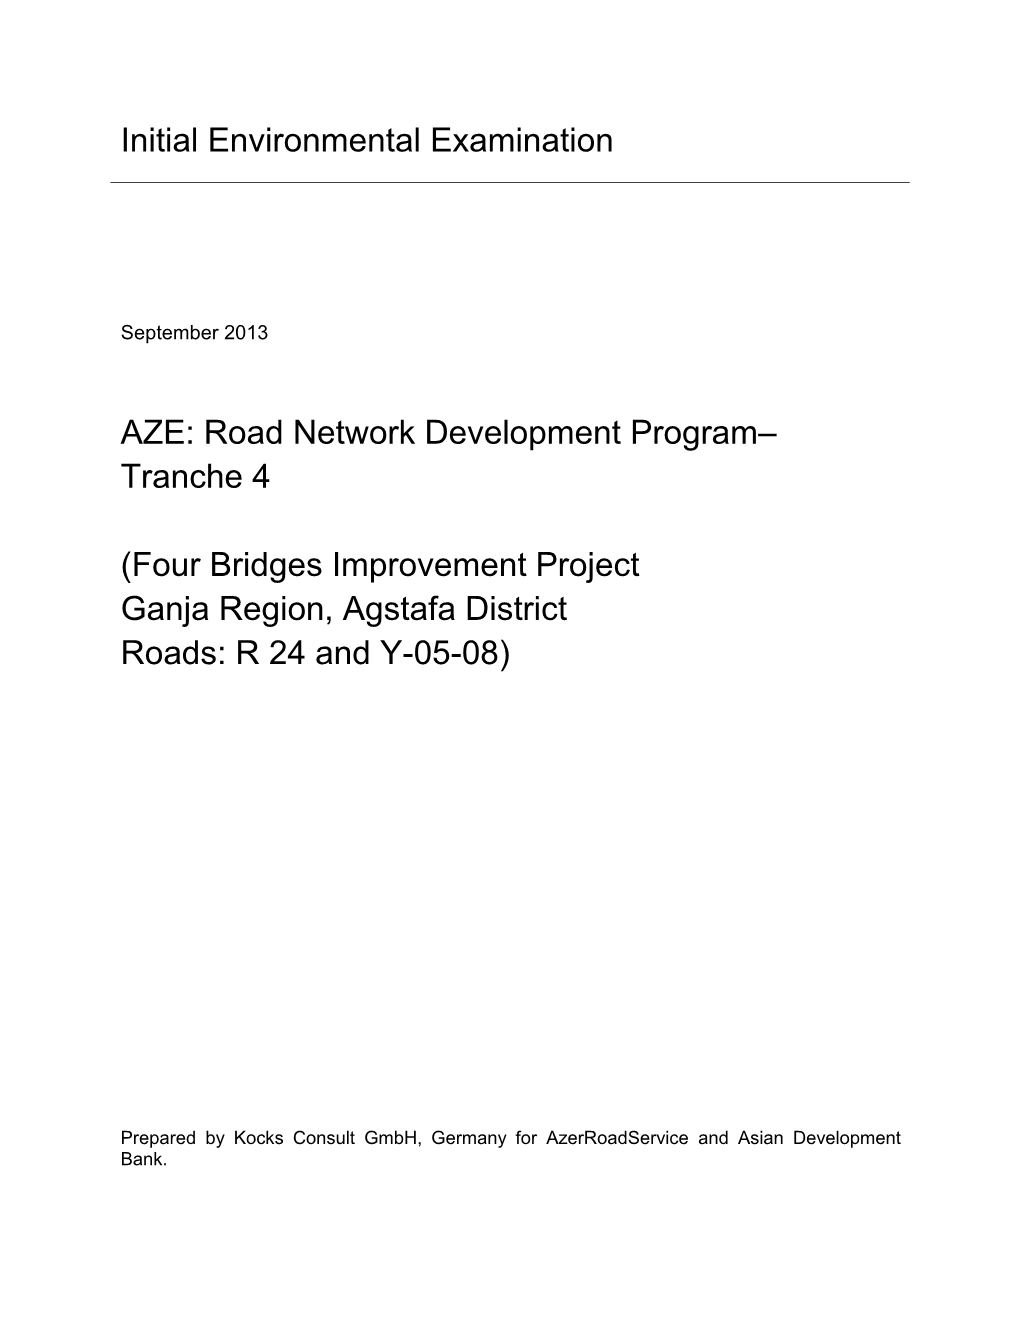 39176-044: Road Network Development Program